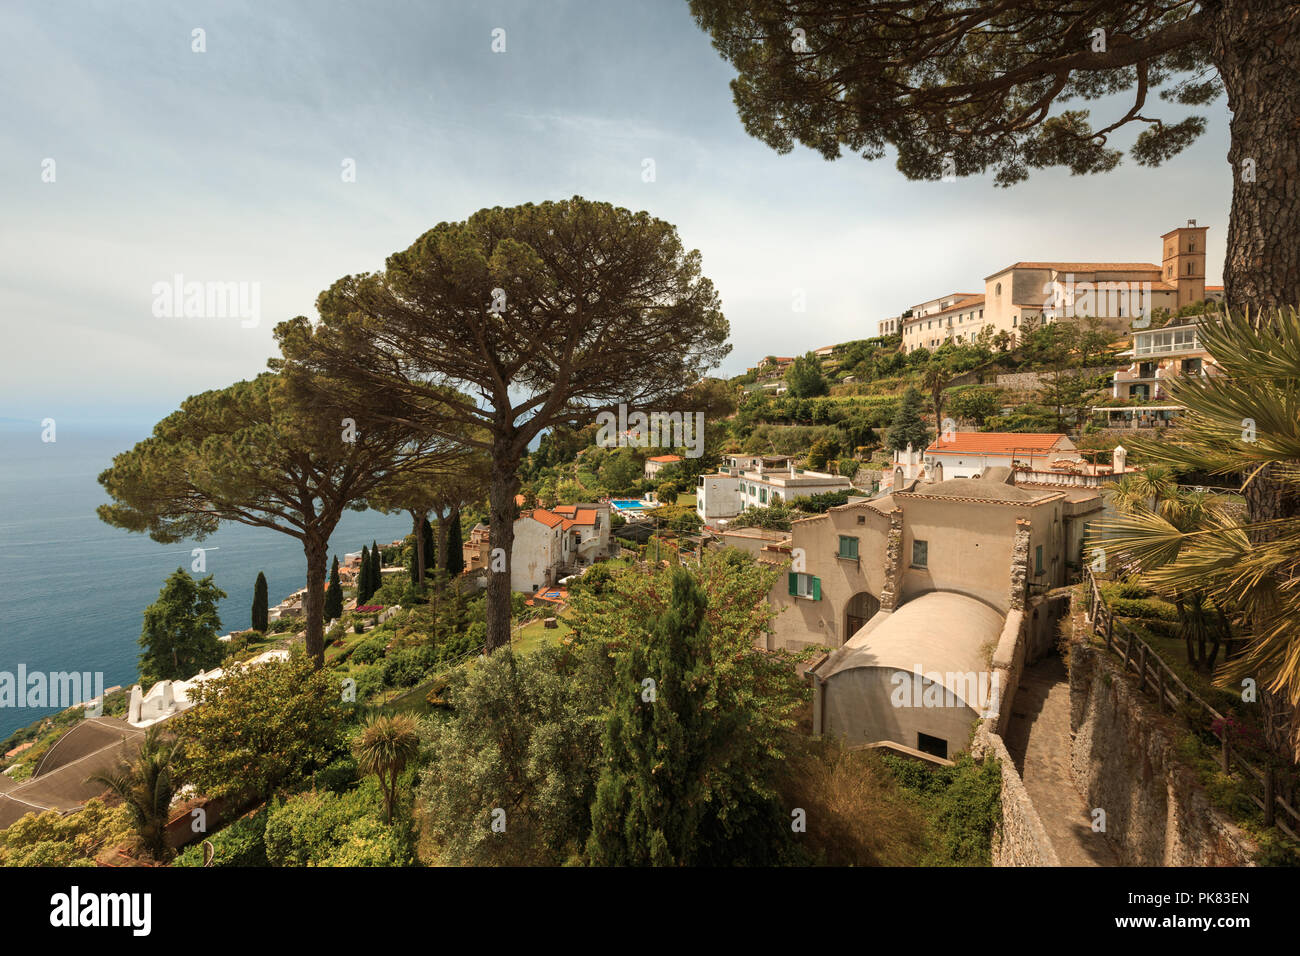 View to the garden at the villa in Ravello. Ravello, scenic view of the Amalfi Coast from Villa Rufolo. Italy. Stock Photo